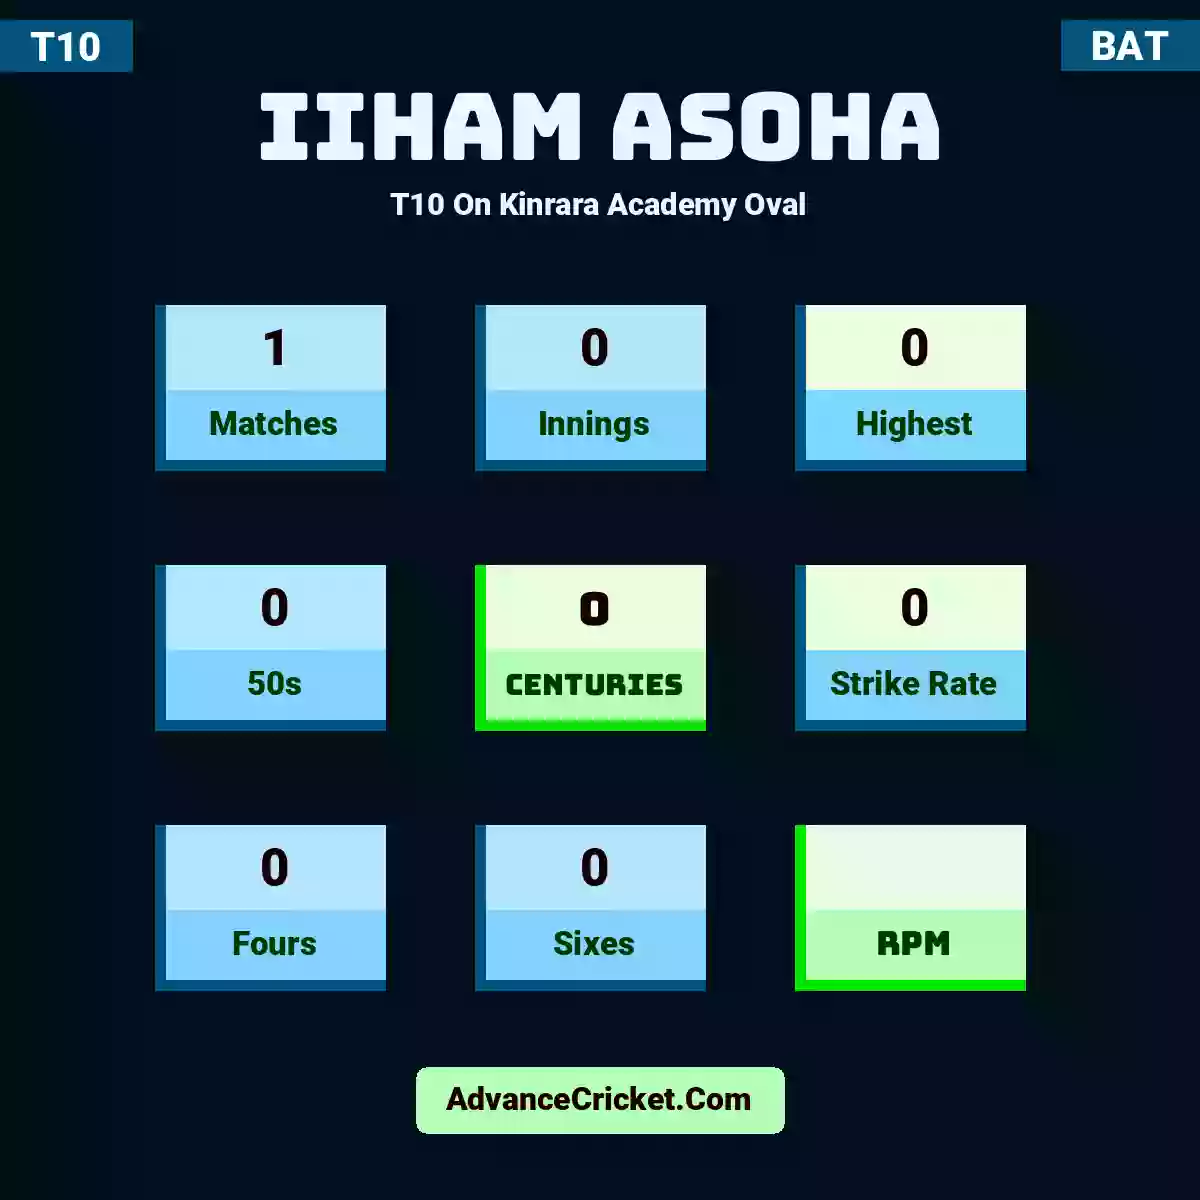 Iiham Asoha T10  On Kinrara Academy Oval, Iiham Asoha played 1 matches, scored 0 runs as highest, 0 half-centuries, and 0 centuries, with a strike rate of 0. I.Asoha hit 0 fours and 0 sixes.